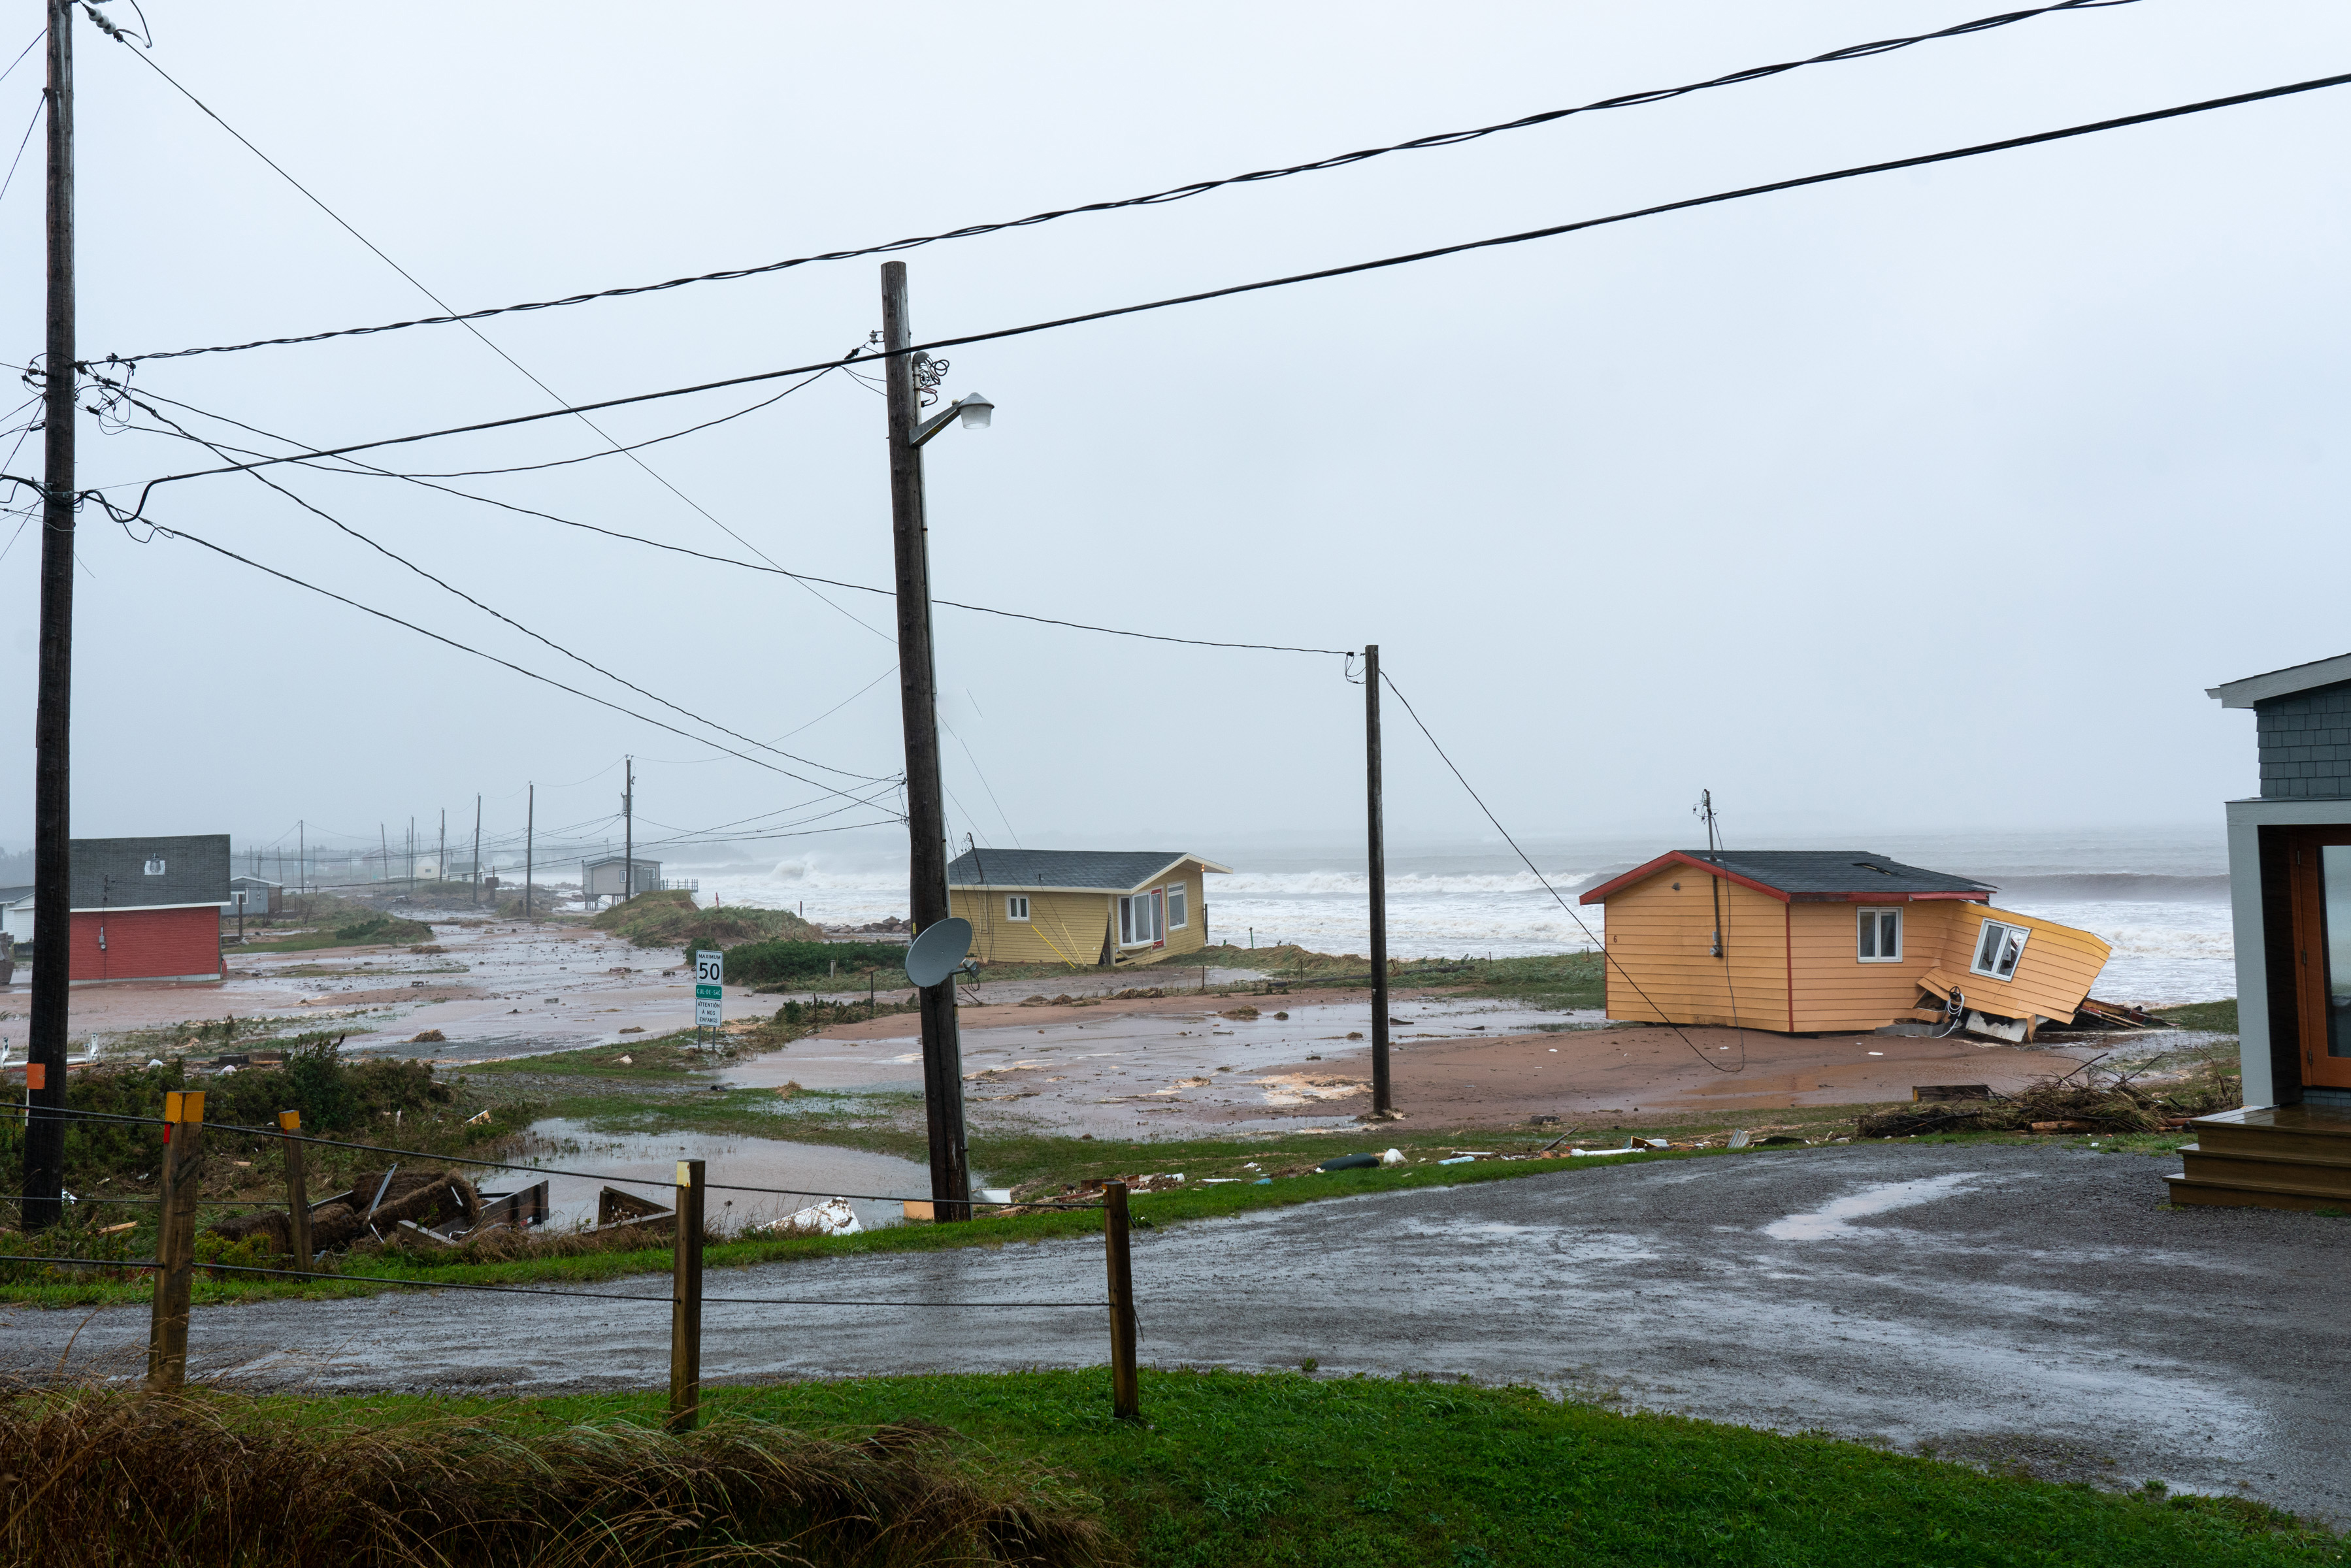 Hurricane Fiona brings damage, debris to Îles-de-la-Madeleine, eastern Quebec